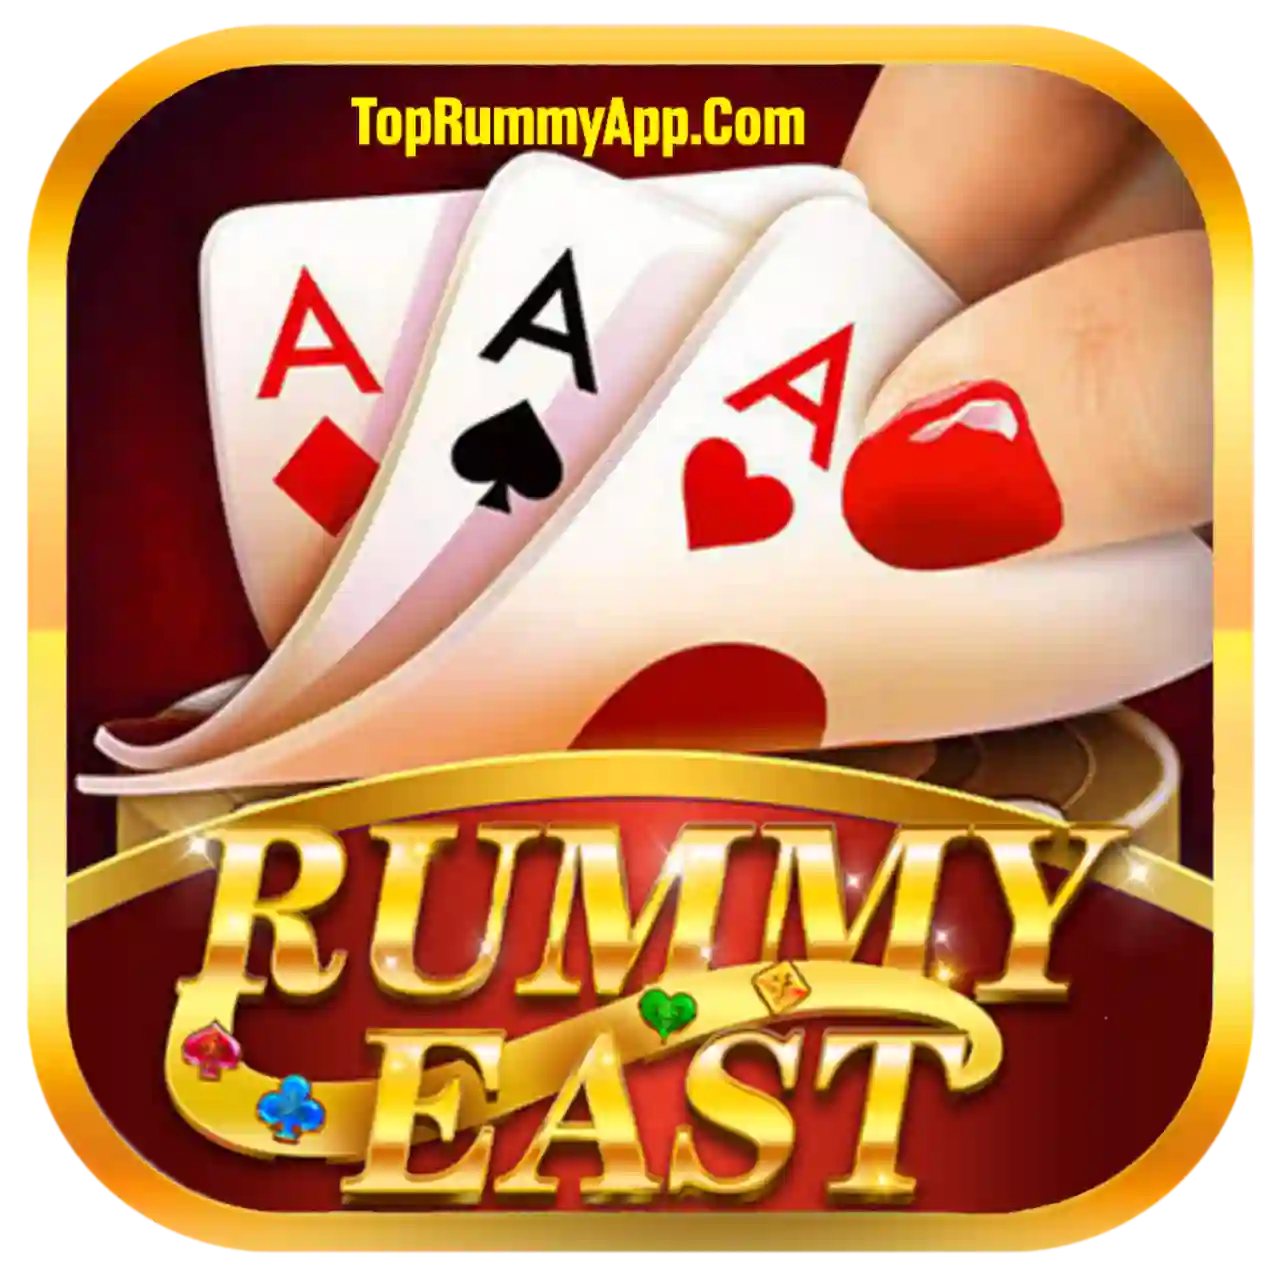 Rummy East Apk Download - Top 25 Rummy App List 41 Bonus